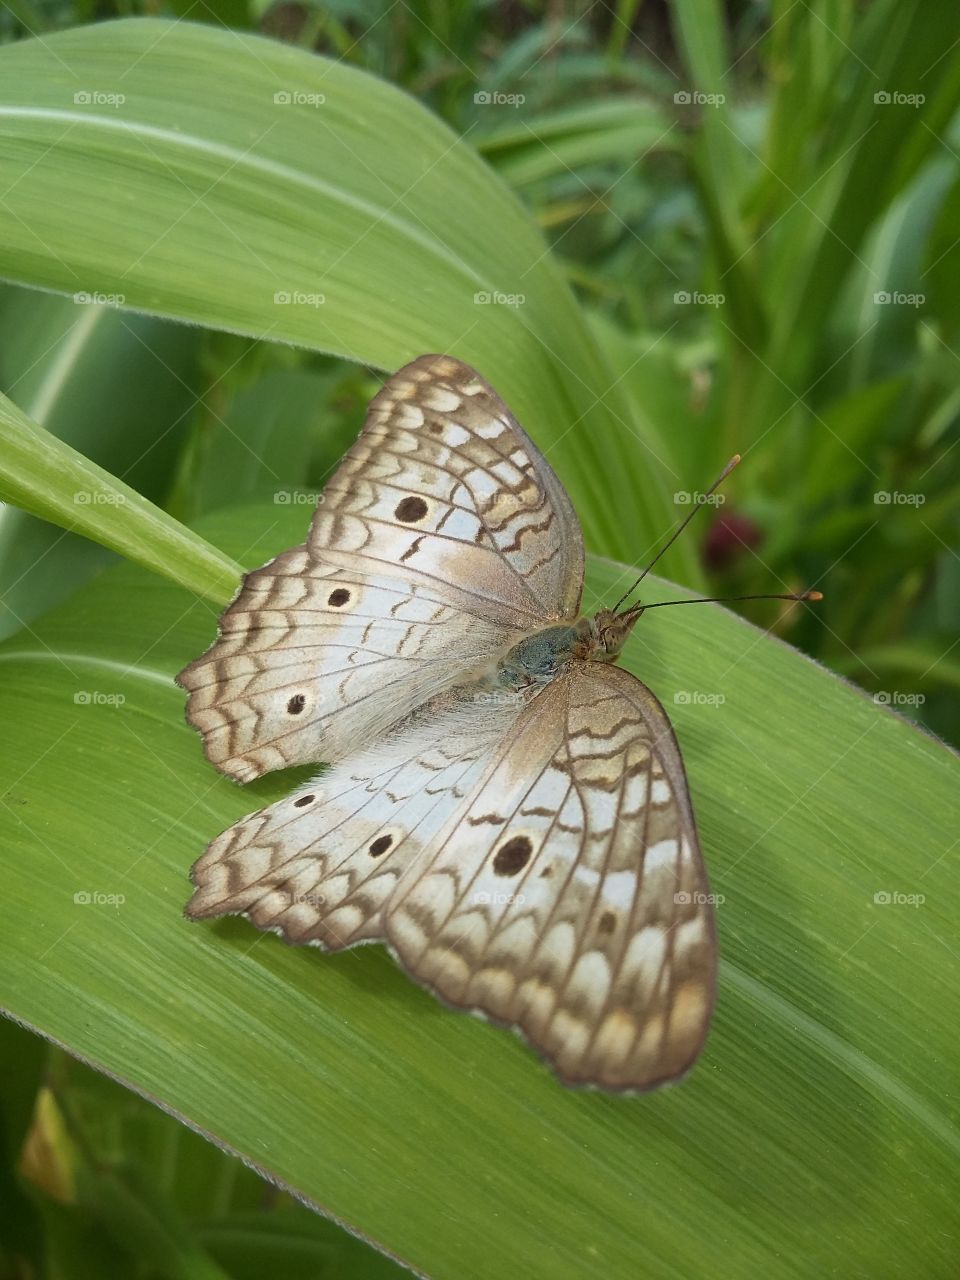 Butterfly resting on the leaf of a cornstalk.  Ipojuca, Pernambuco, Brazil.